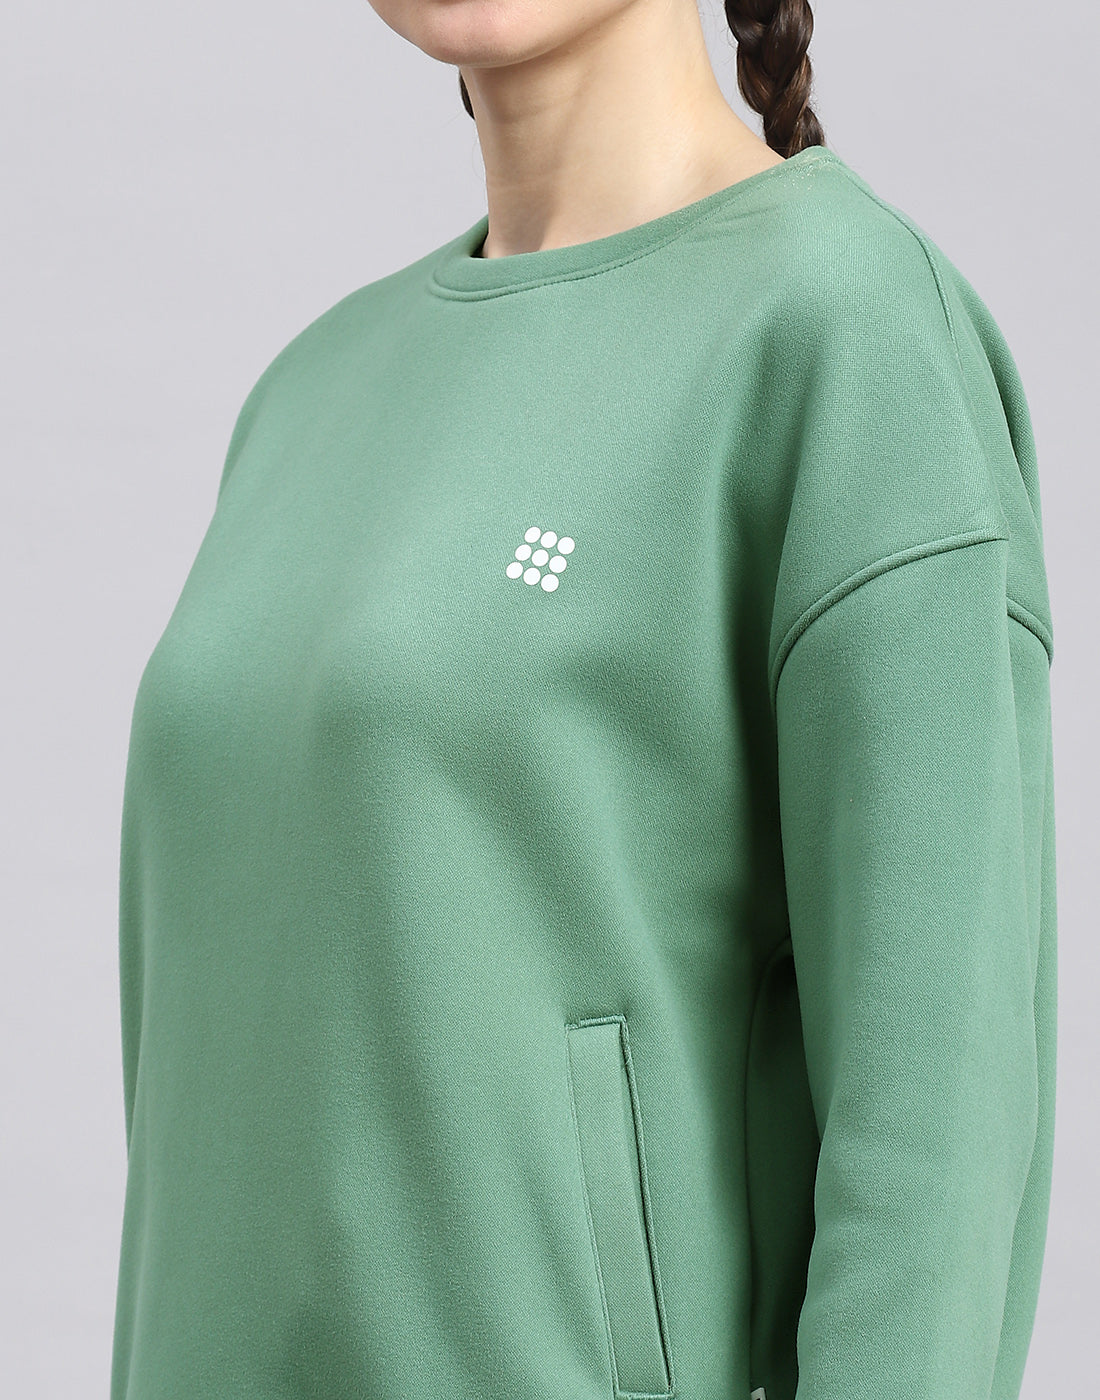 Women Green Solid Round Neck Full Sleeve Sweatshirt